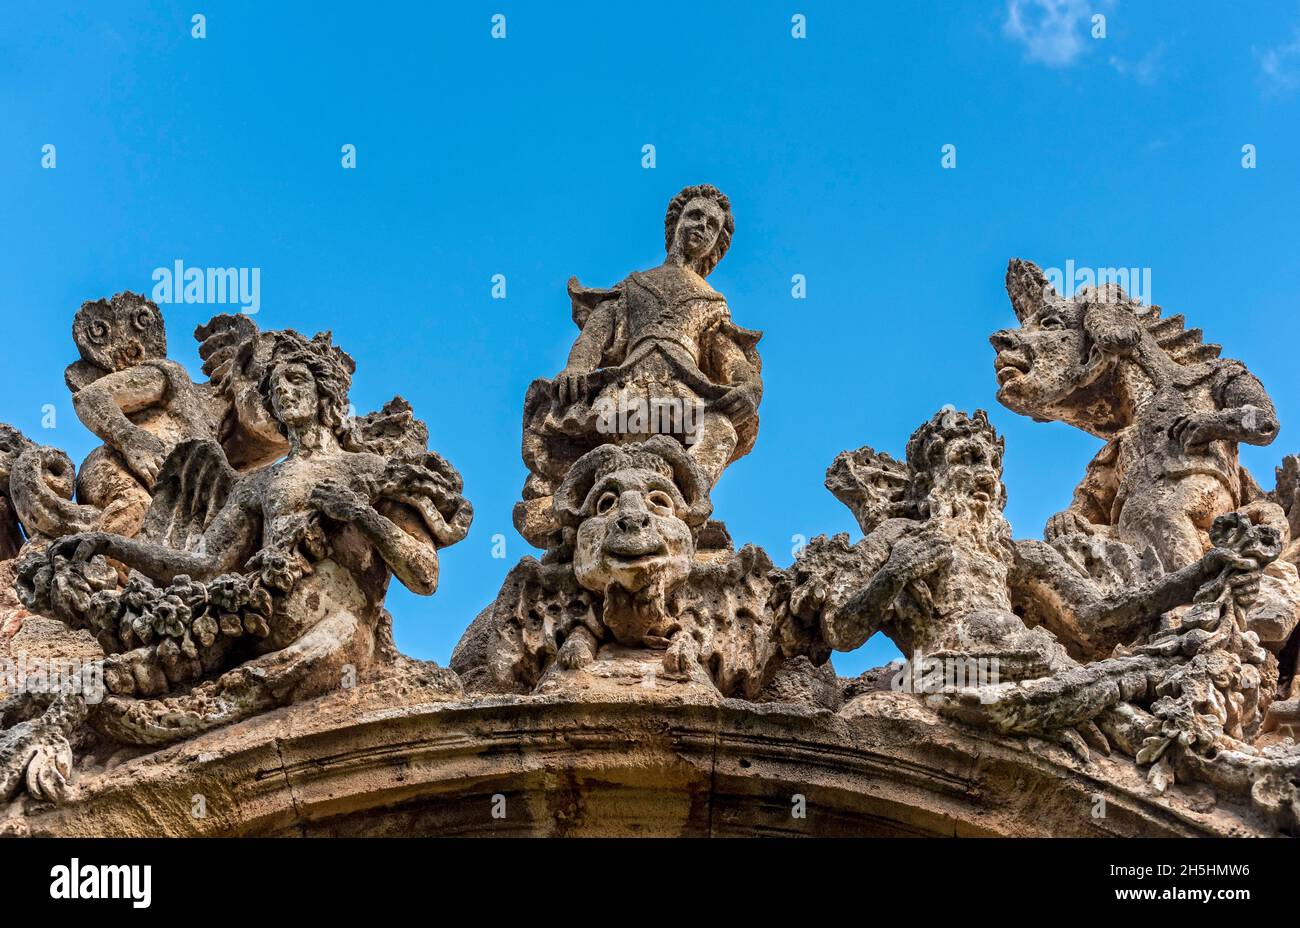 Monsterstatuen, Villa Palagonia, Bagheria, Sizilien, Italien Stockfoto